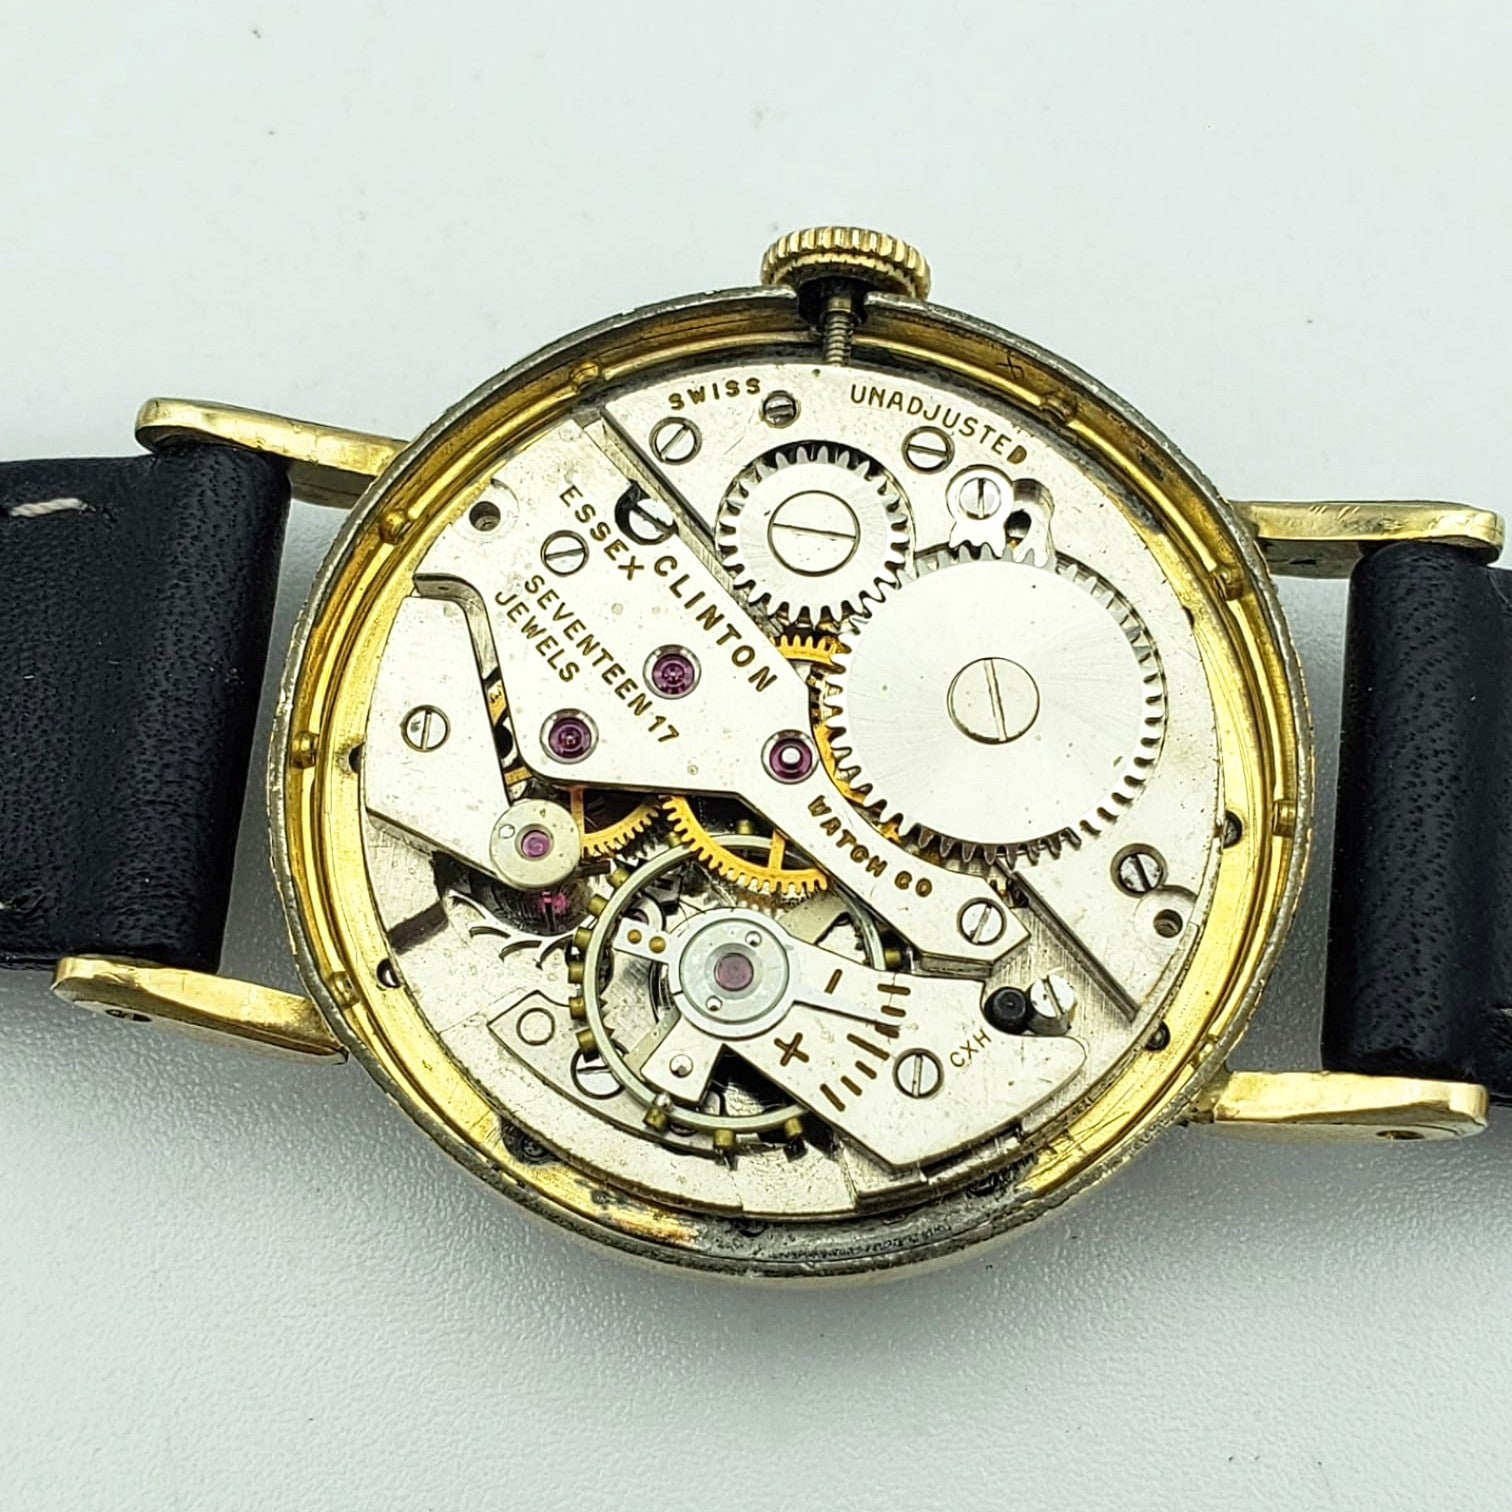 Vintage Monarch Watch Co. 17 Jewels Swiss Unadjusted Movement. | eBay